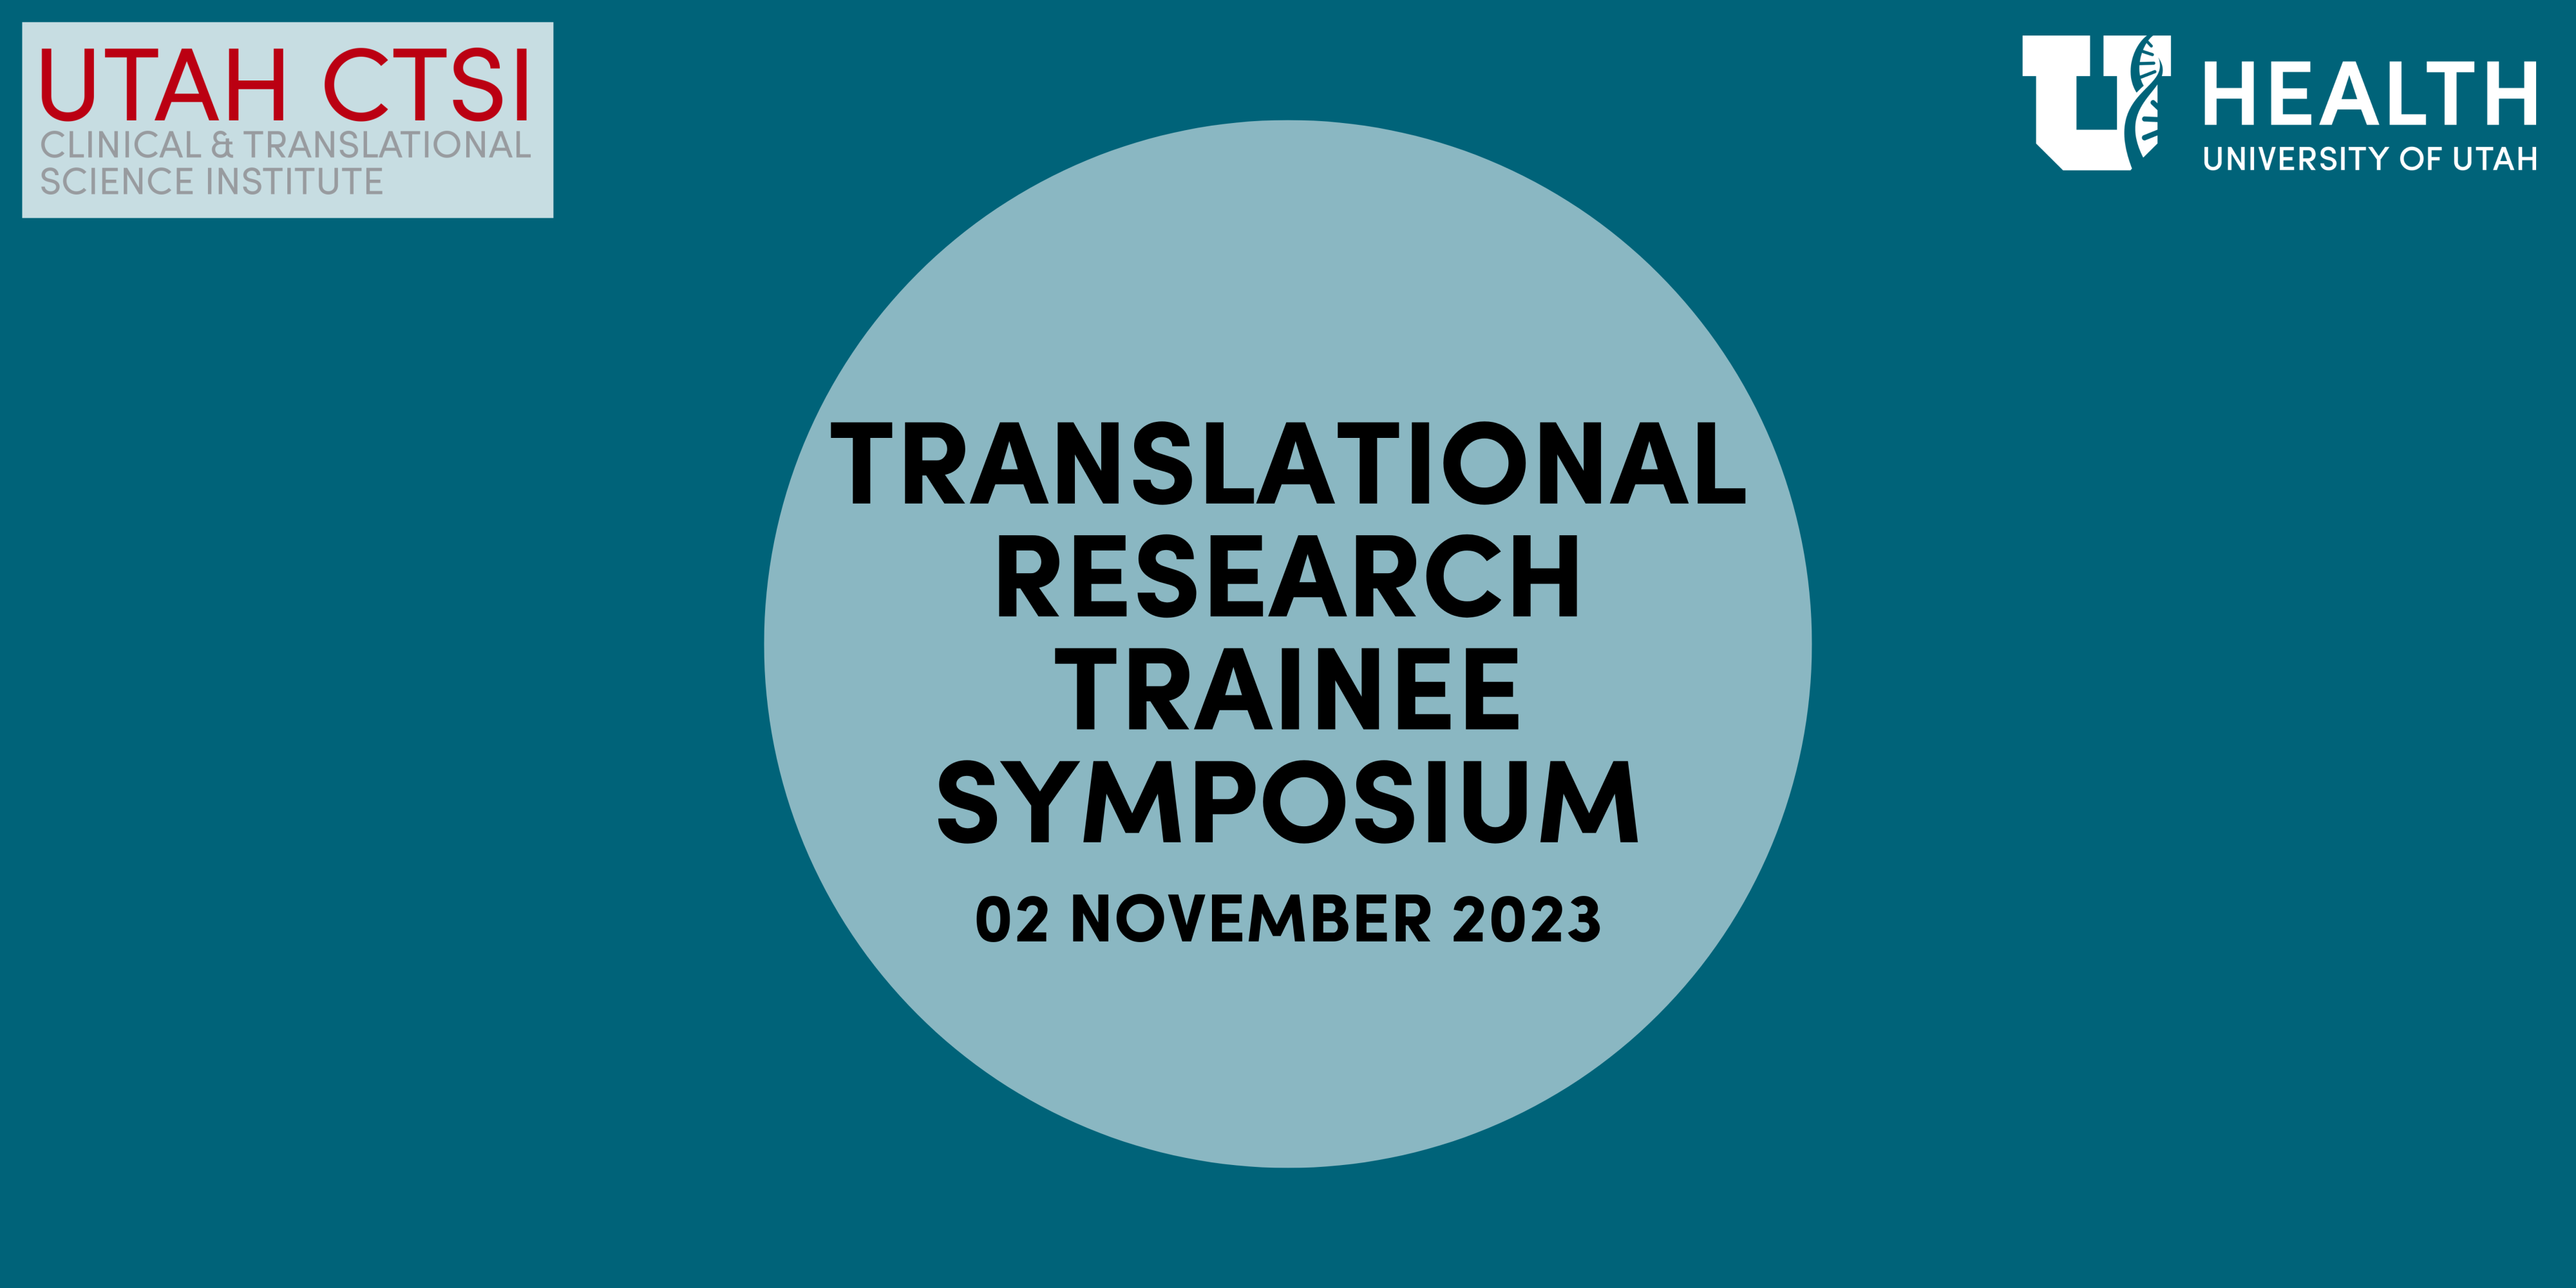 Translational Research Trainee Symposium November 2, 2023